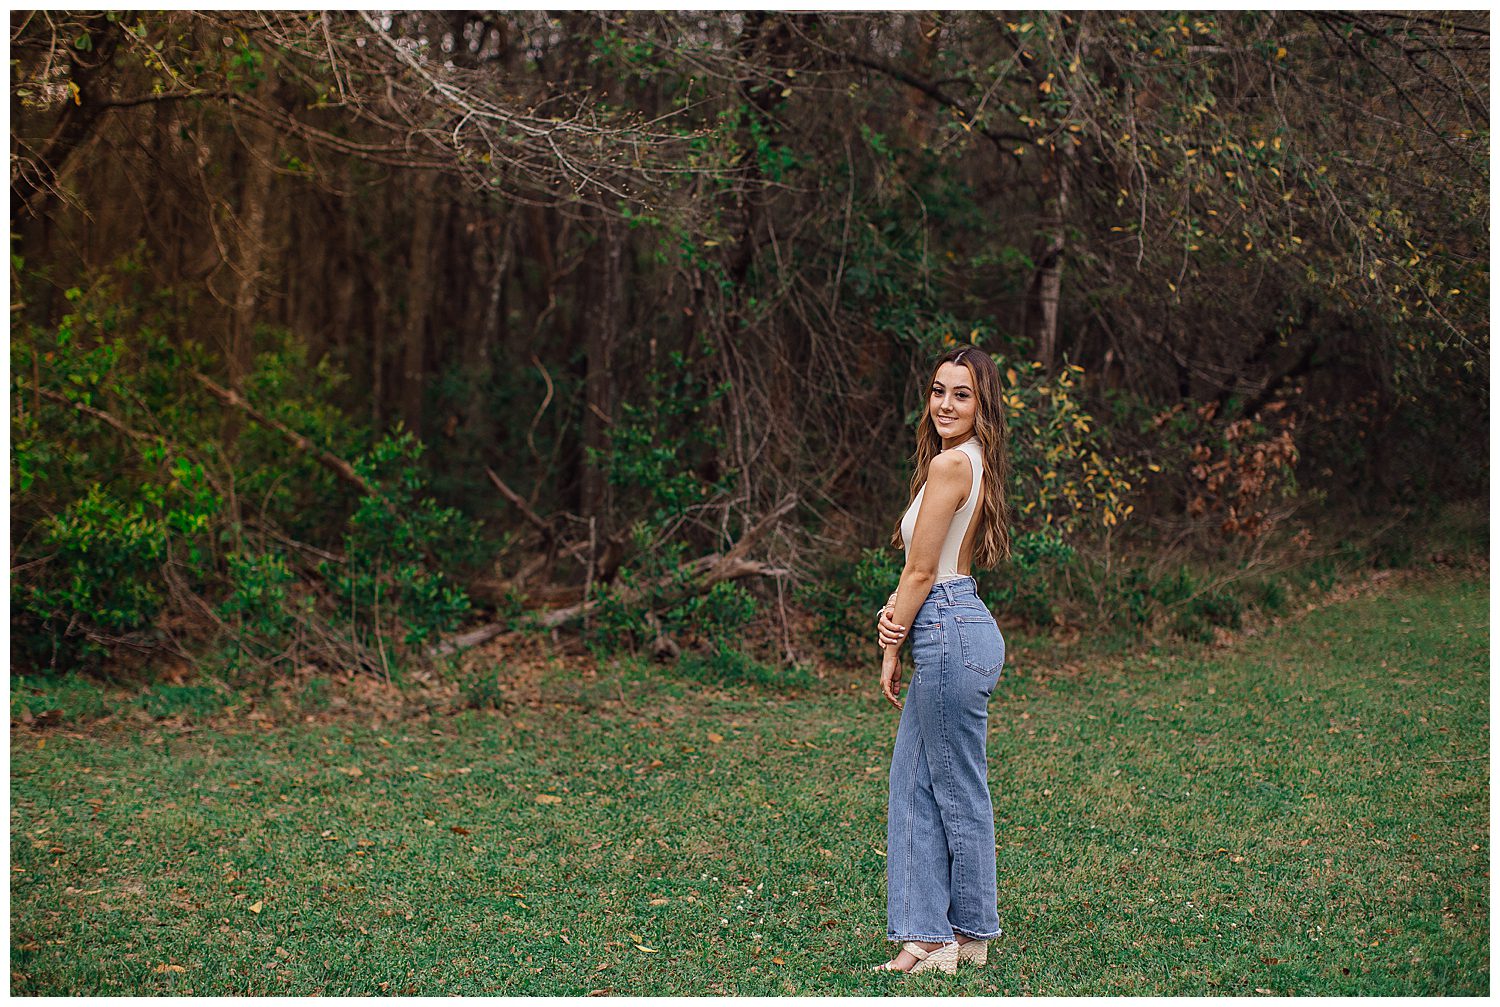 high school senior portrait of girl in denim jeans and beige top standing in field Houston